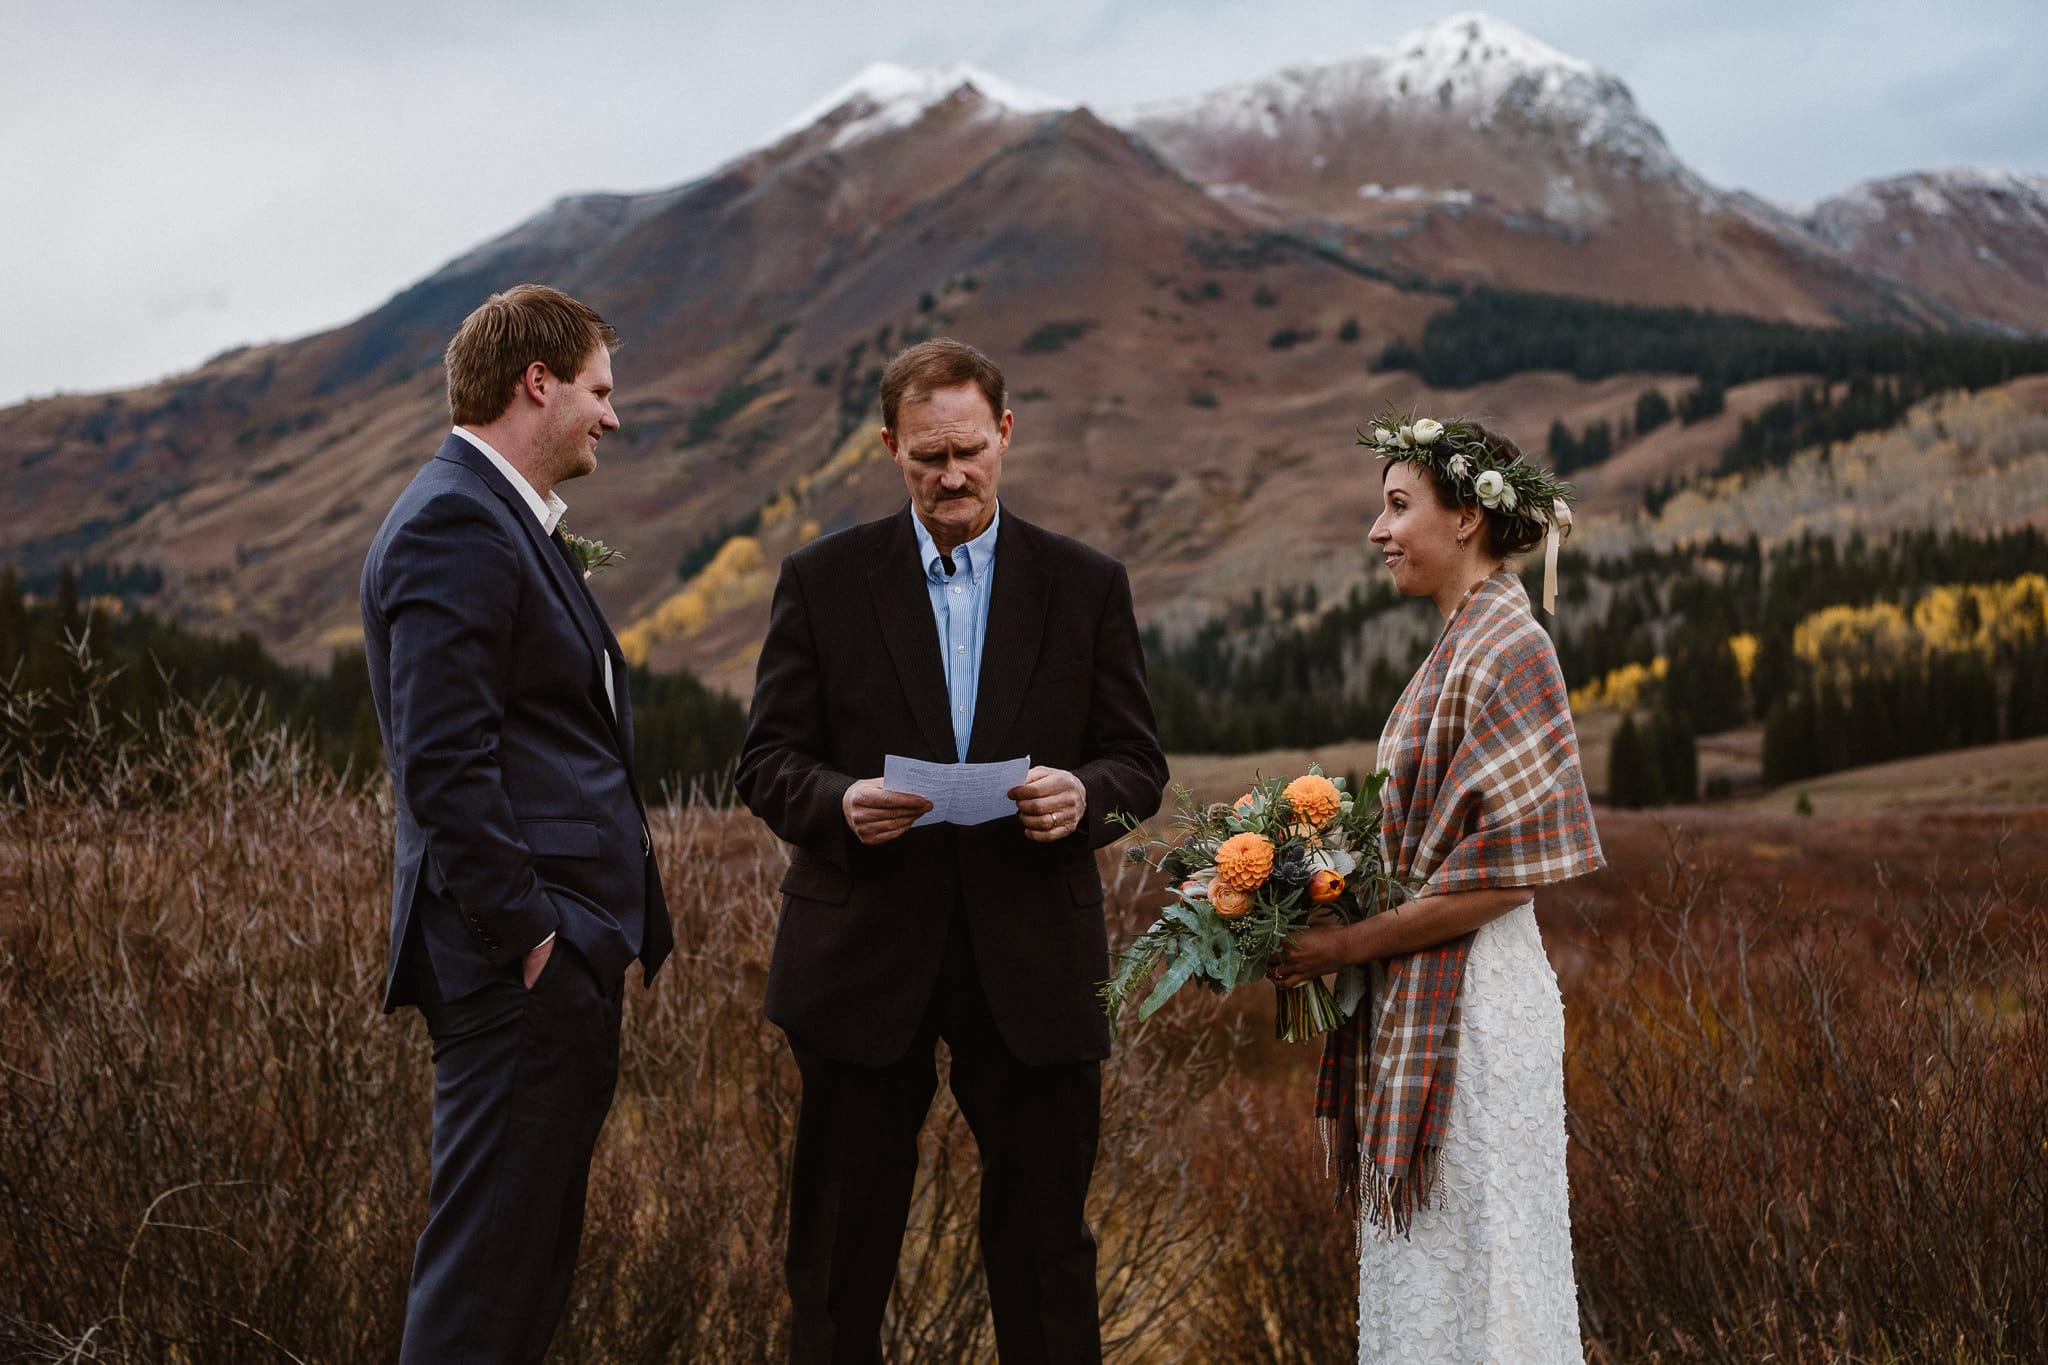 Crested Butte Wedding Photographer, Scarp Ridge Lodge intimate elopement, outdoor elopement in Colorado, Colorado mountain adventure wedding, 